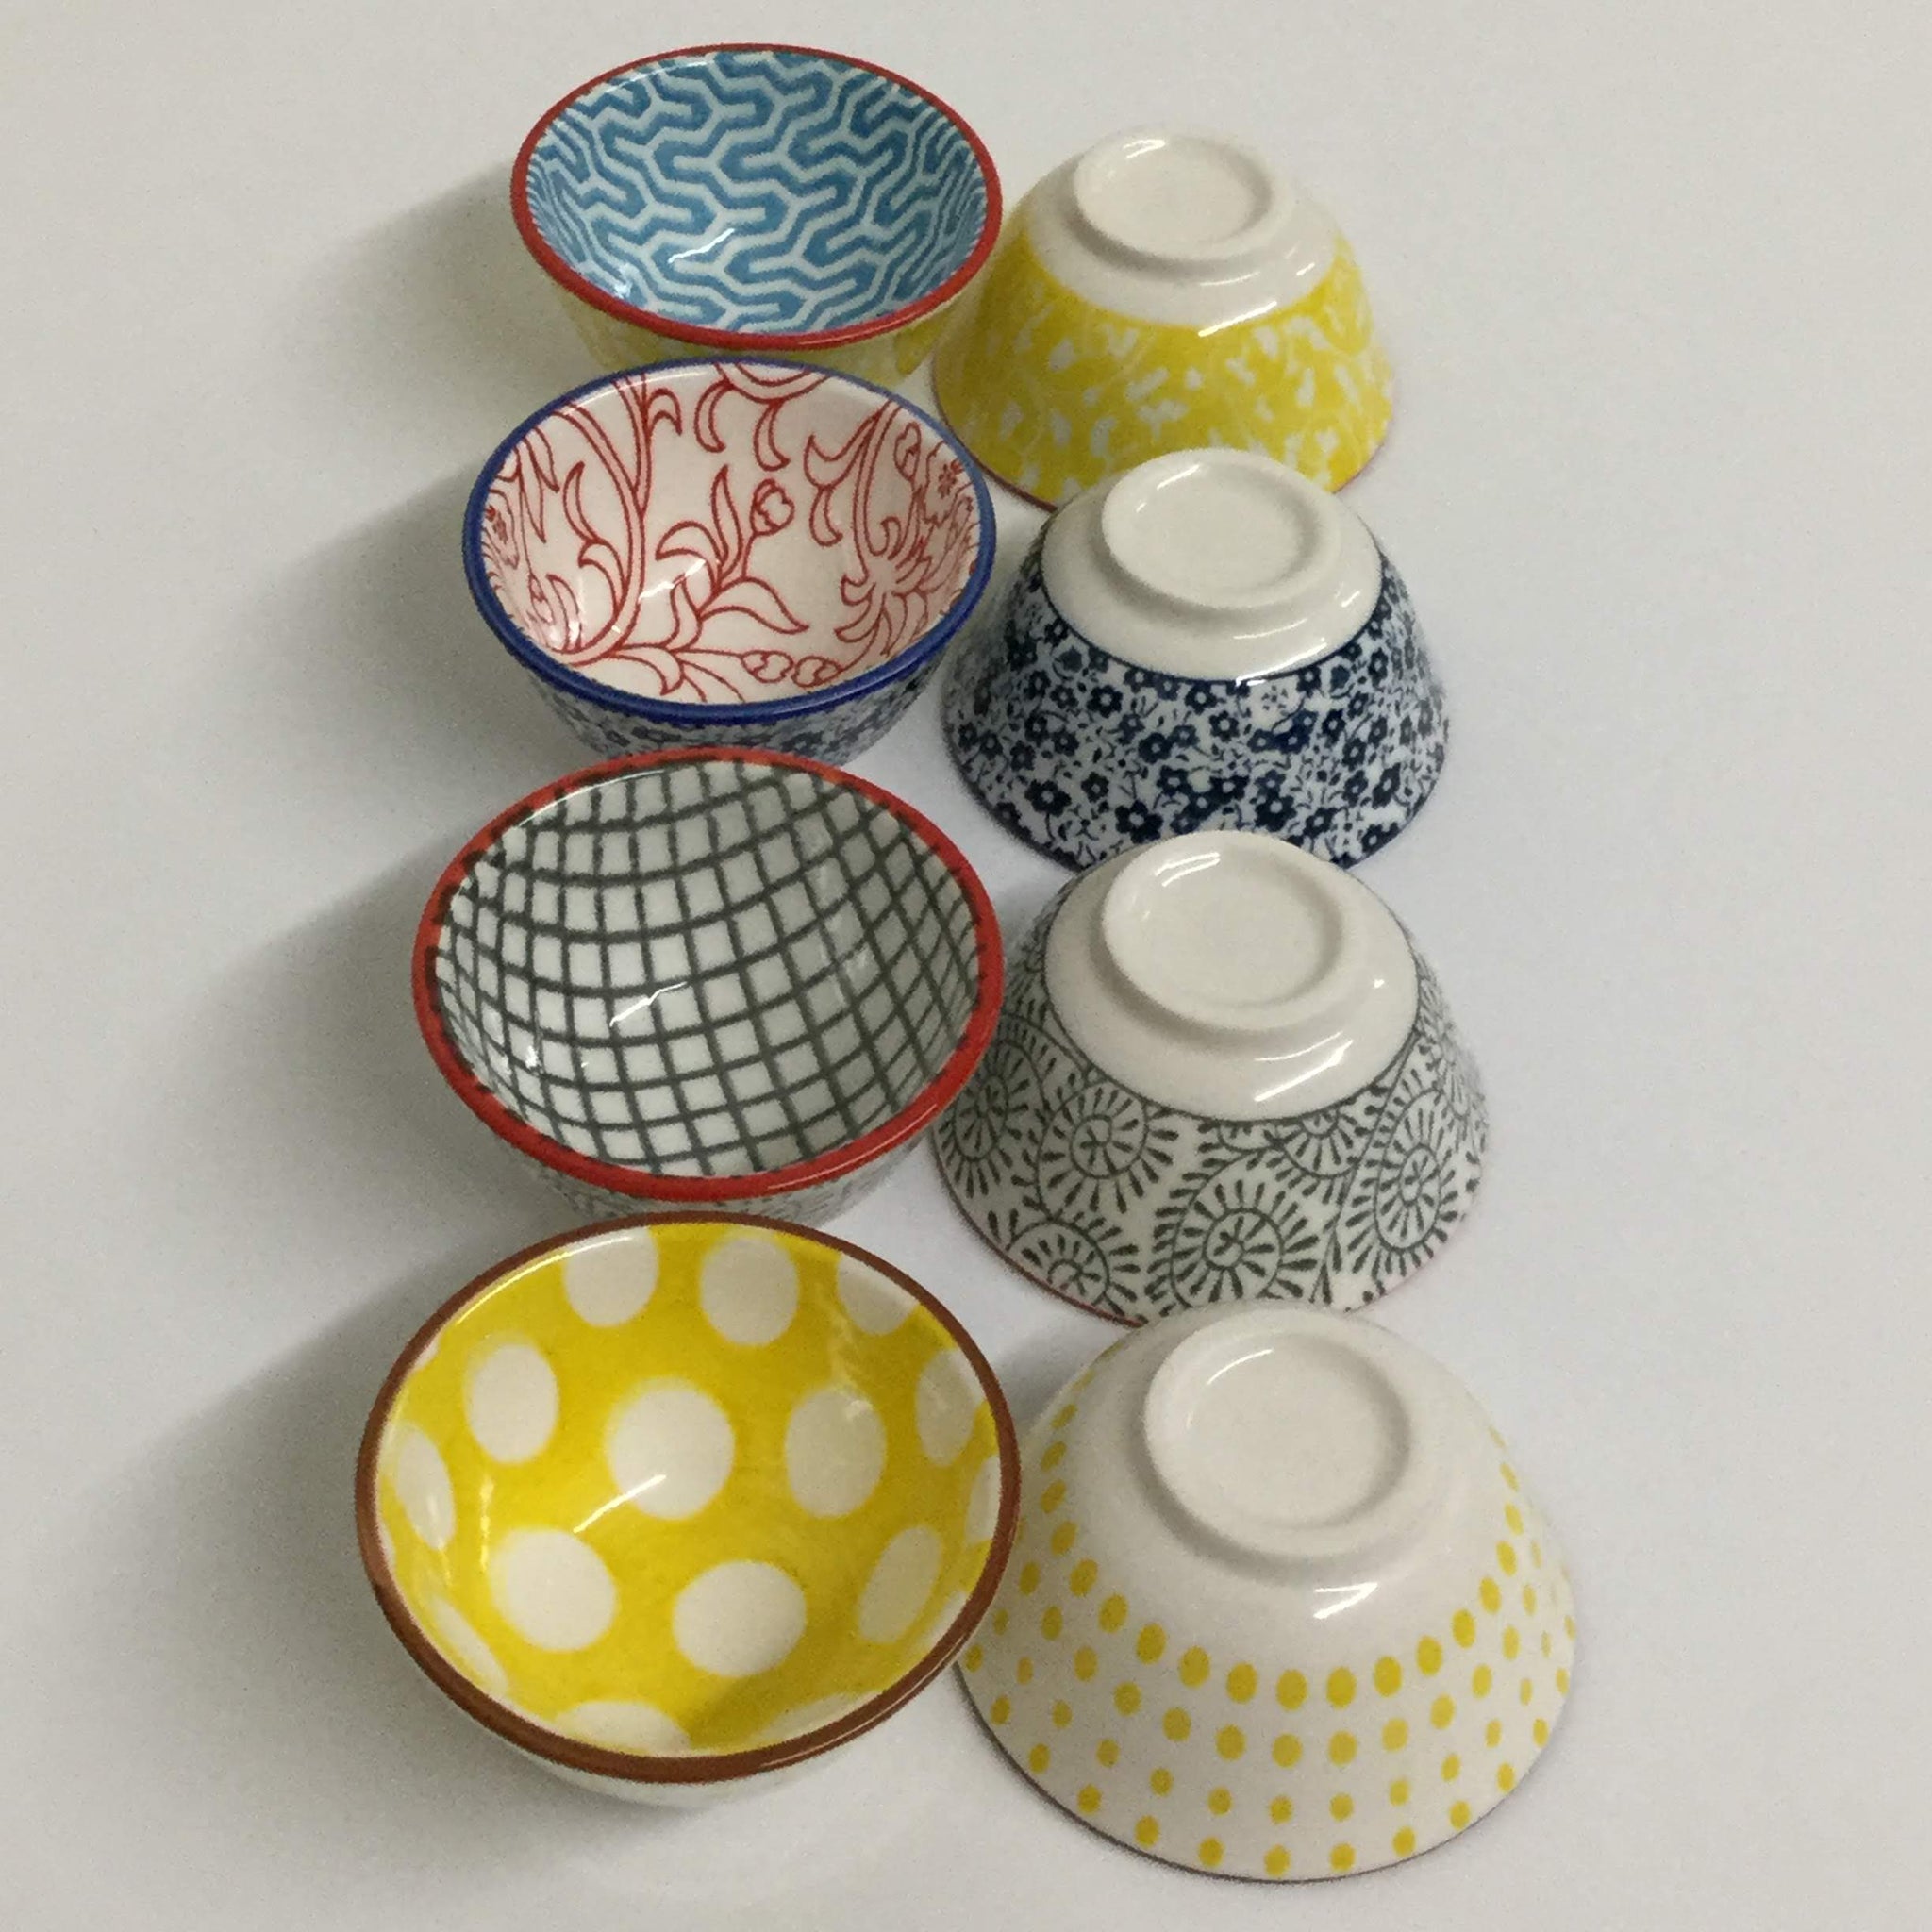 mini bowls, sake cups